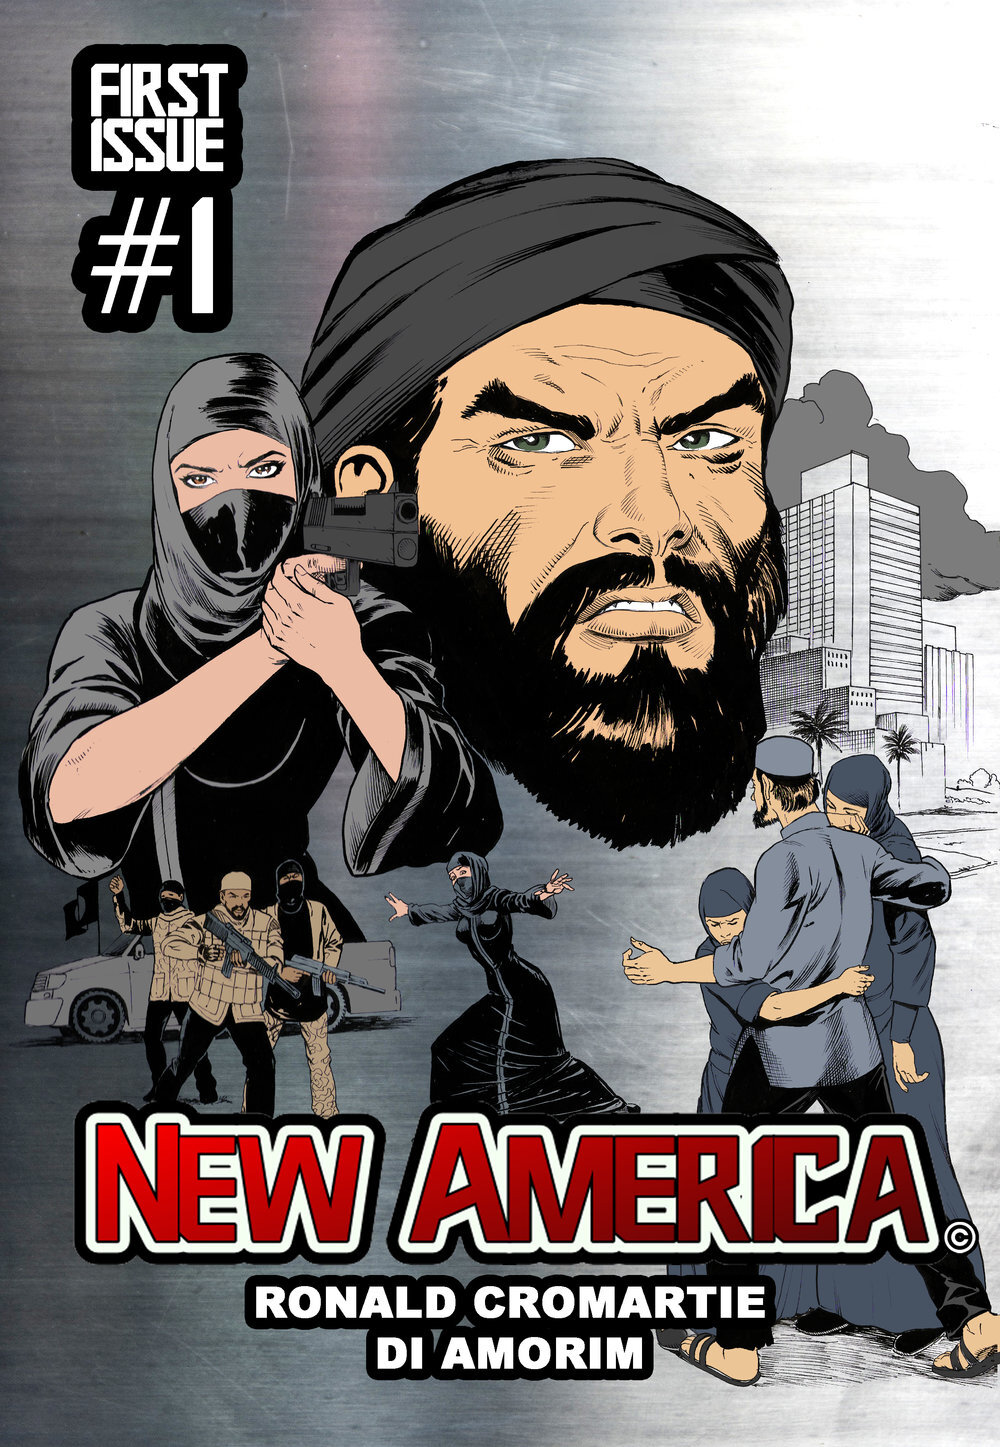 cover-new-america1.jpg